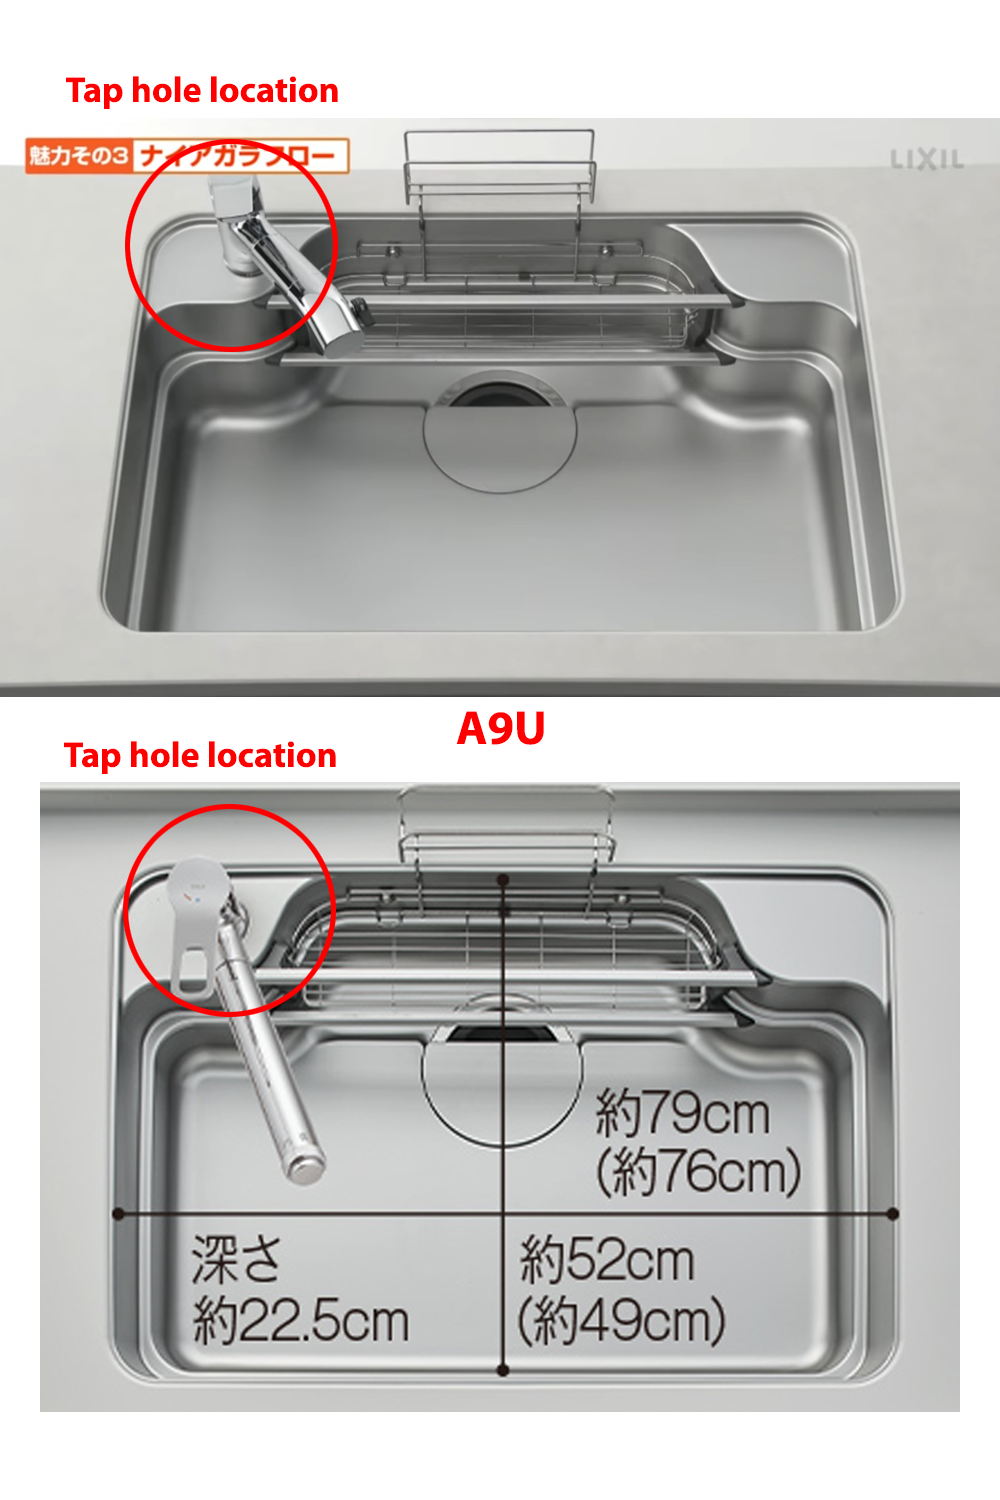 LIXIL A9U 790mm Japanese 2-Levels Multi-functional Silence Sink 日本LIXIL 超大W水槽 雙層 多功能靜音不銹鋼廚房星盆  | Made in Japan |